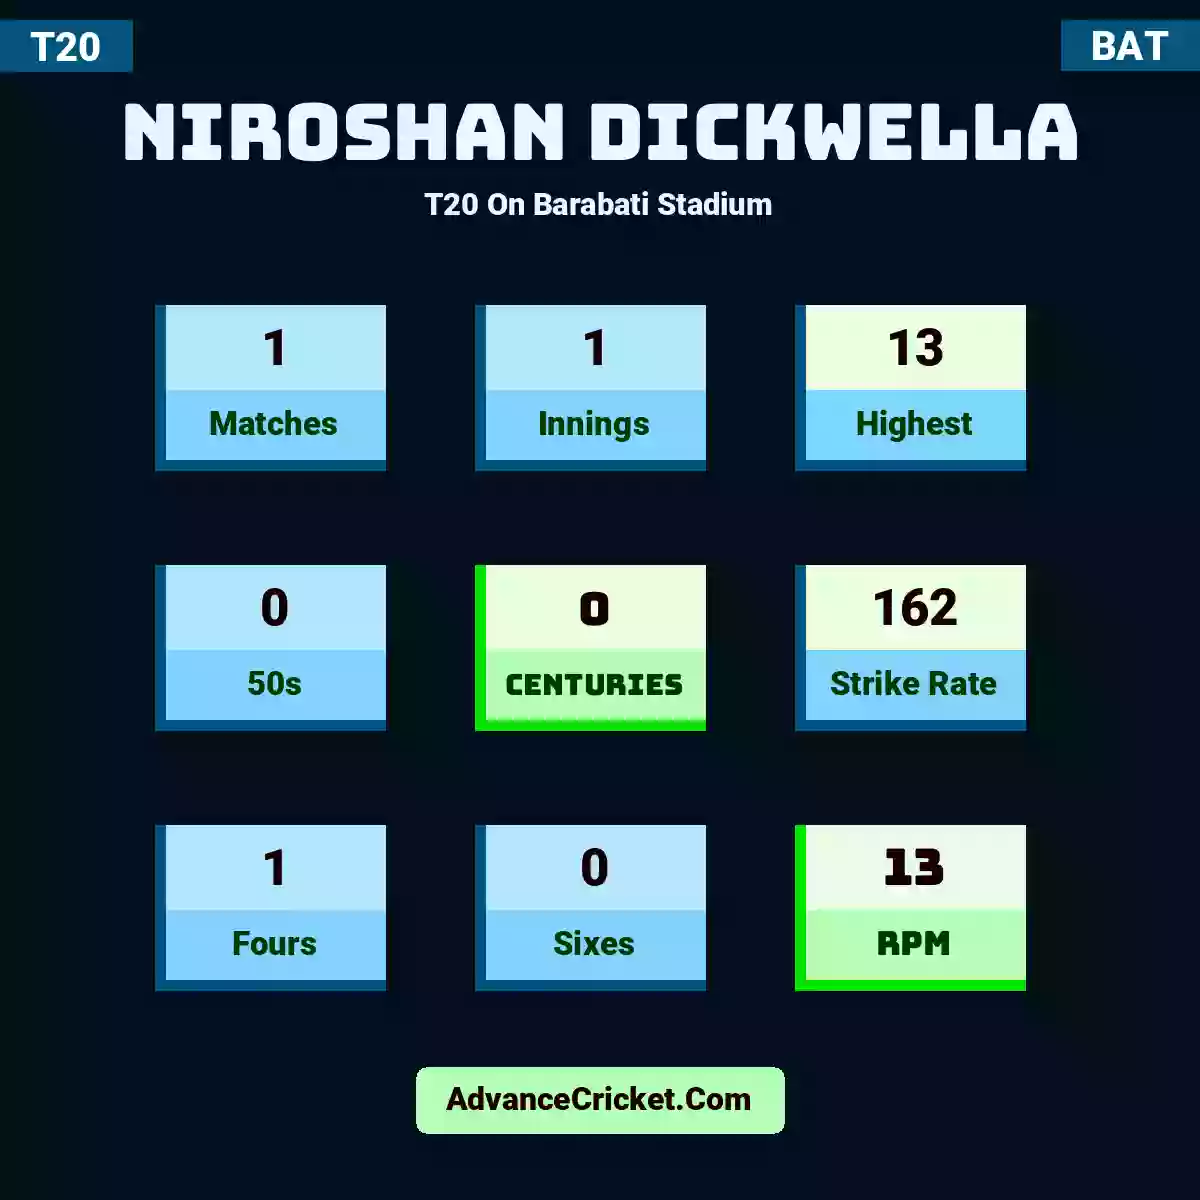 Niroshan Dickwella T20  On Barabati Stadium, Niroshan Dickwella played 1 matches, scored 13 runs as highest, 0 half-centuries, and 0 centuries, with a strike rate of 162. N.Dickwella hit 1 fours and 0 sixes, with an RPM of 13.